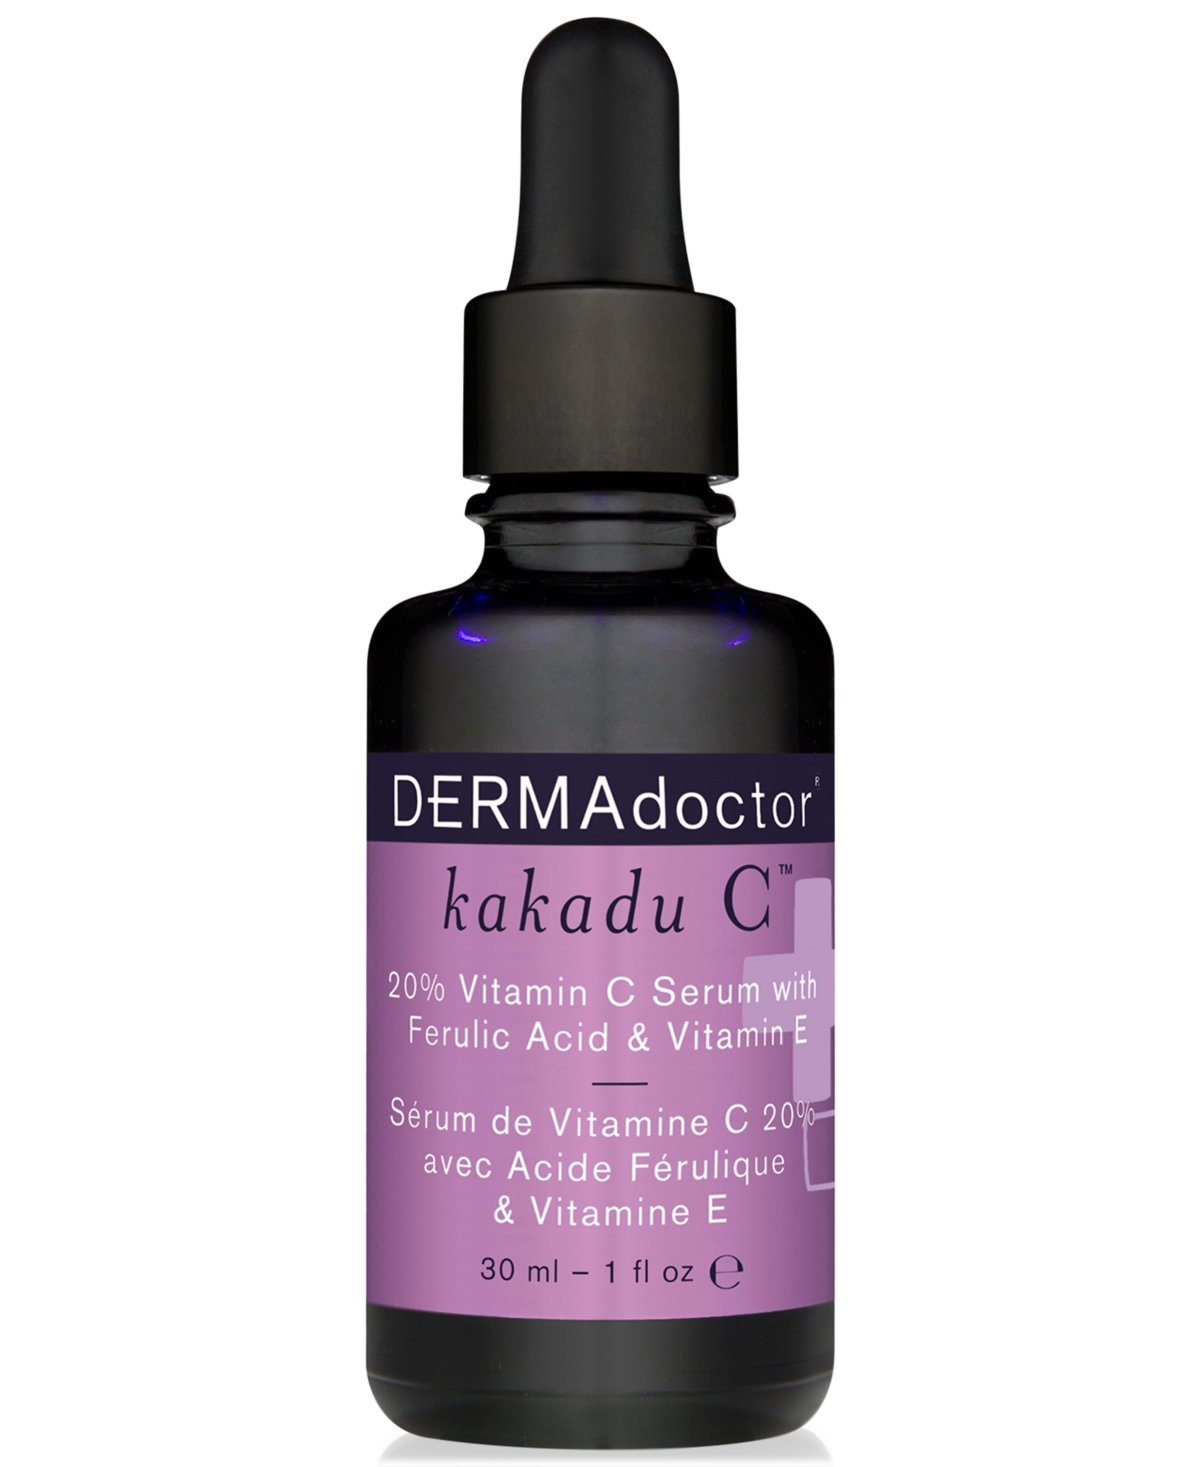 kakadu C 20% Vitamin C Serum with Ferulic Acid & Vitamin E